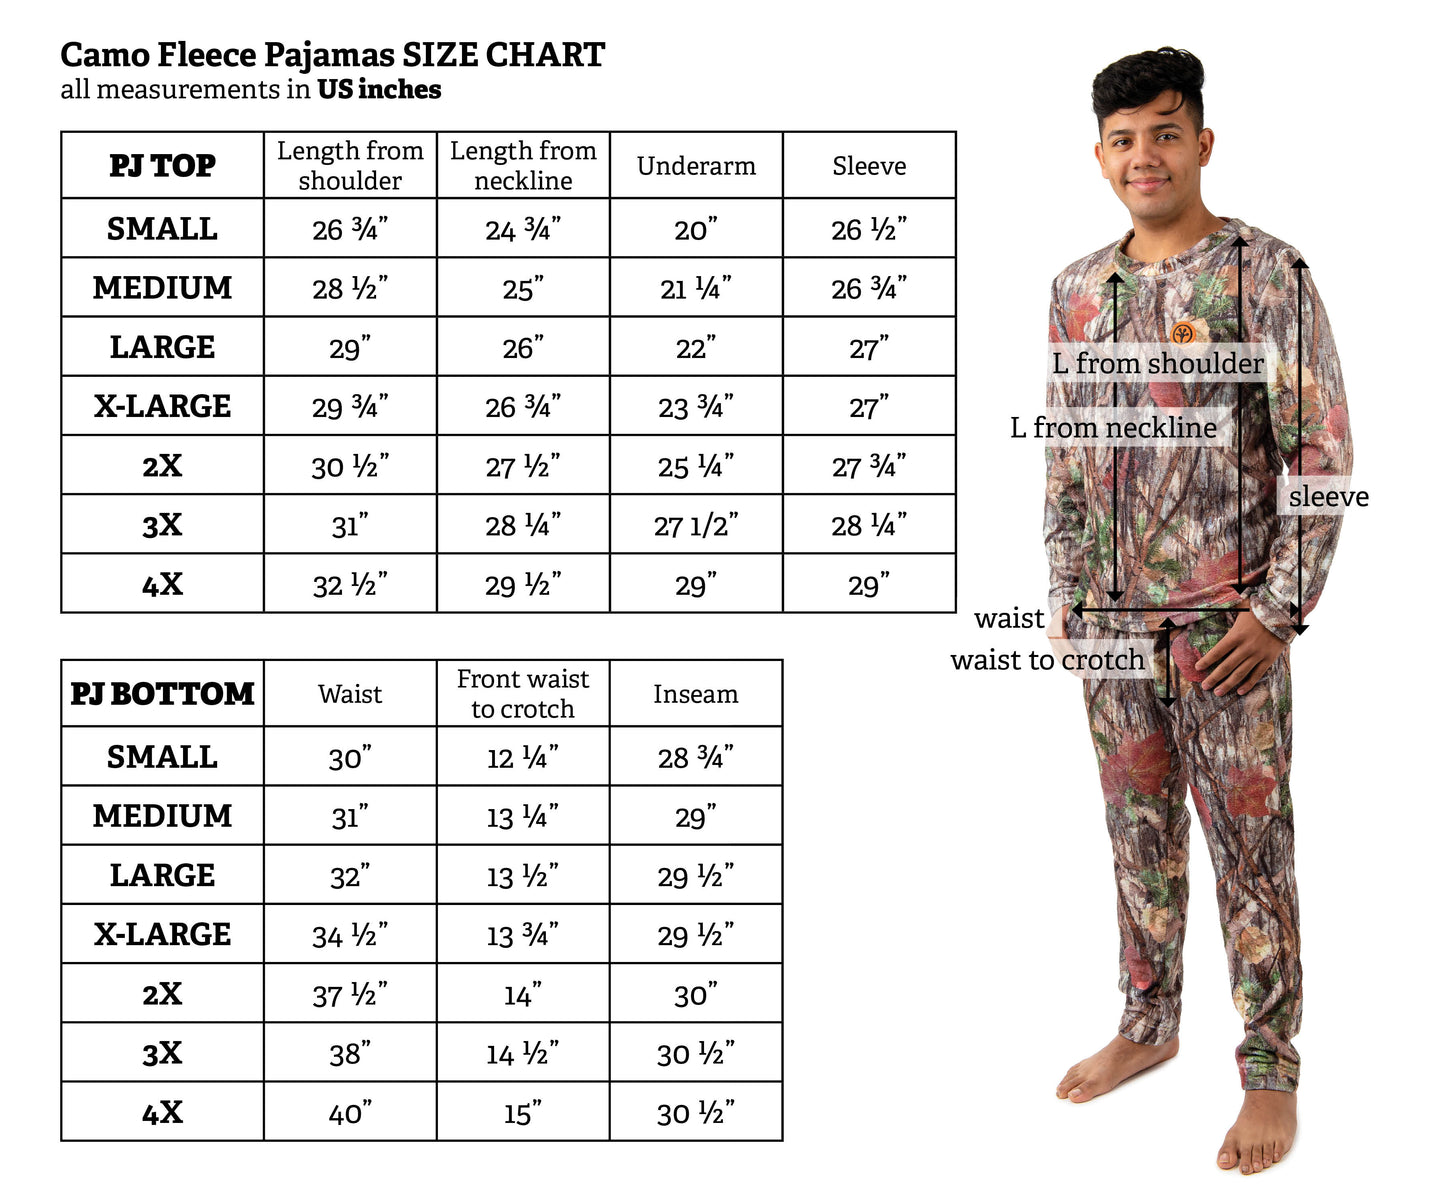 Men's Coral Fleece Camo Pajama Set, Orange